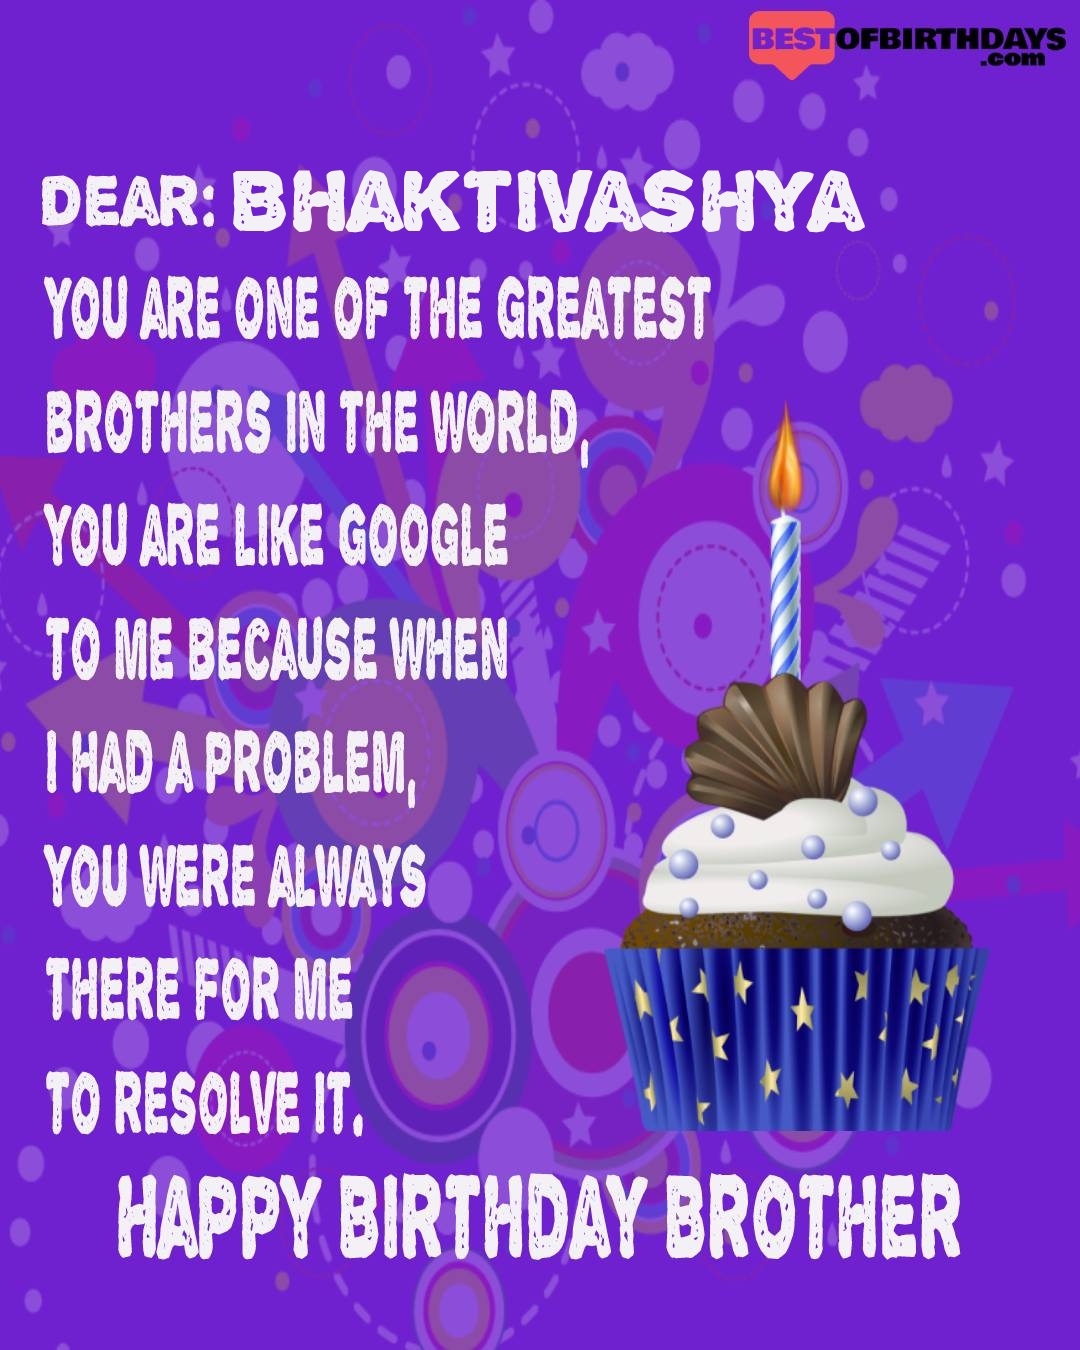 Happy birthday bhaktivashya bhai brother bro